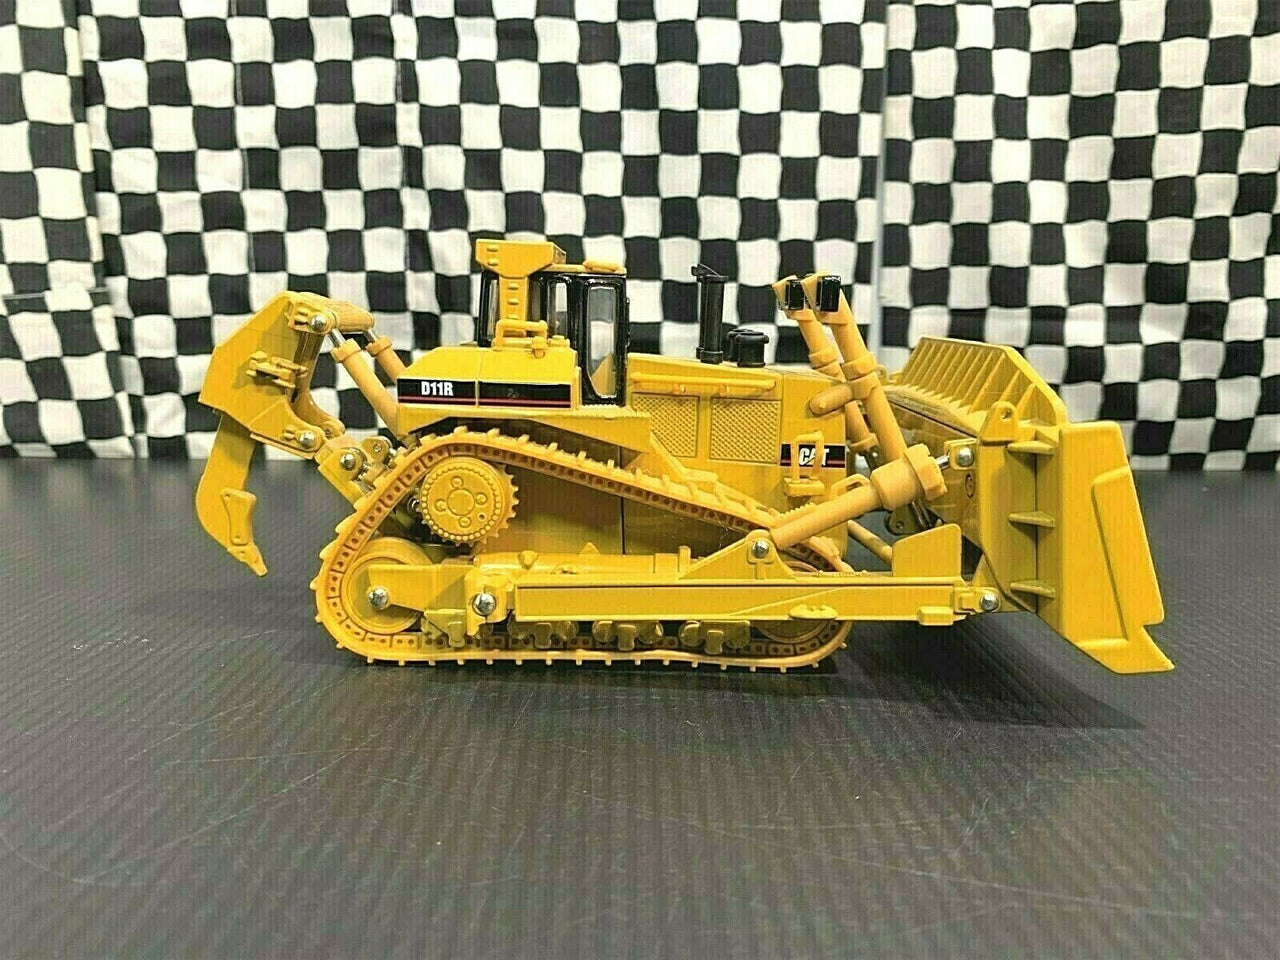 55025 Caterpillar D11R Crawler Tractor Scale 1:50